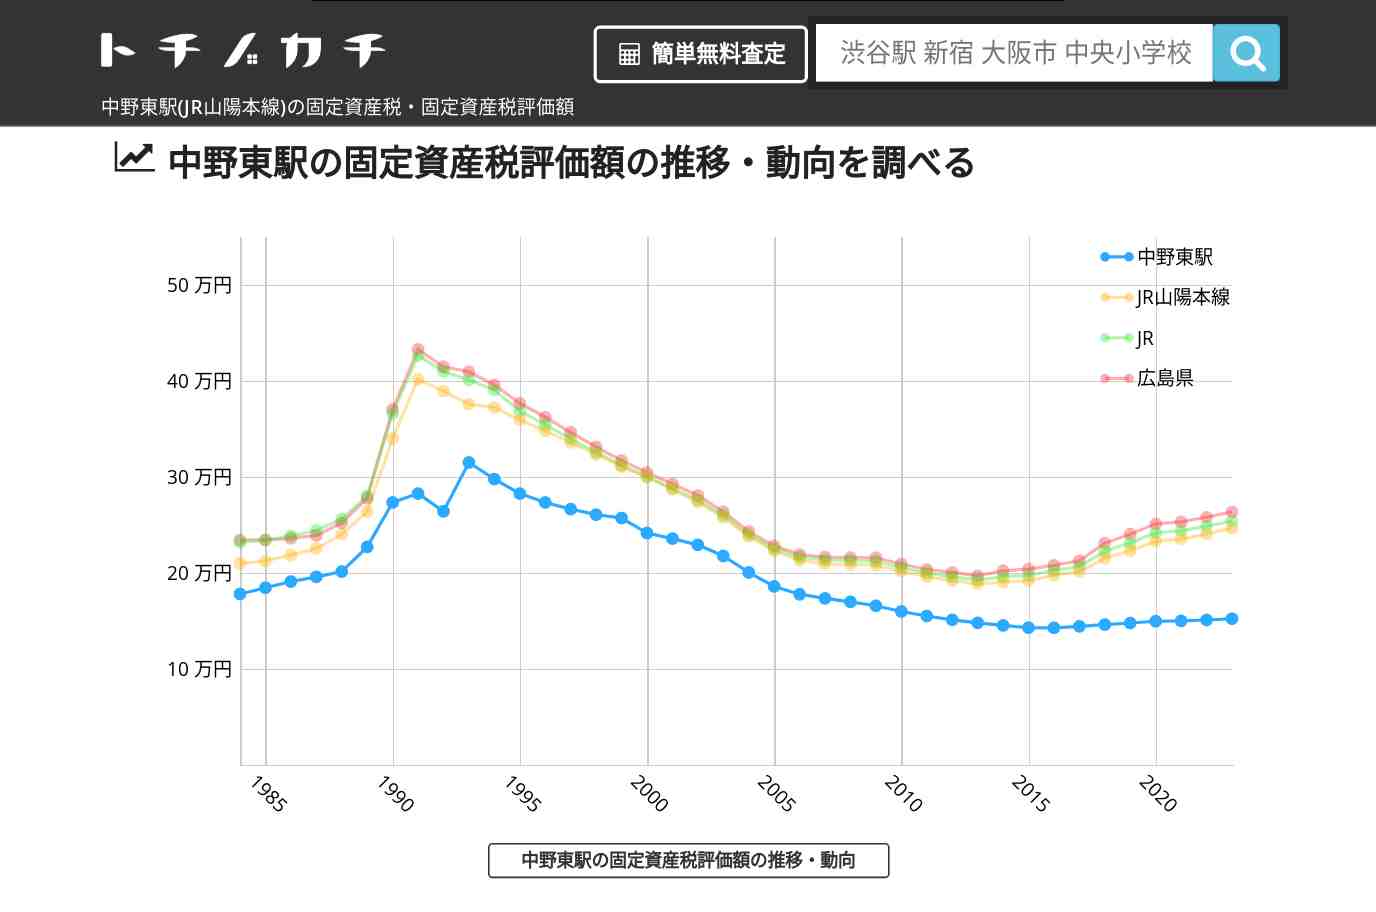 中野東駅(JR山陽本線)の固定資産税・固定資産税評価額 | トチノカチ